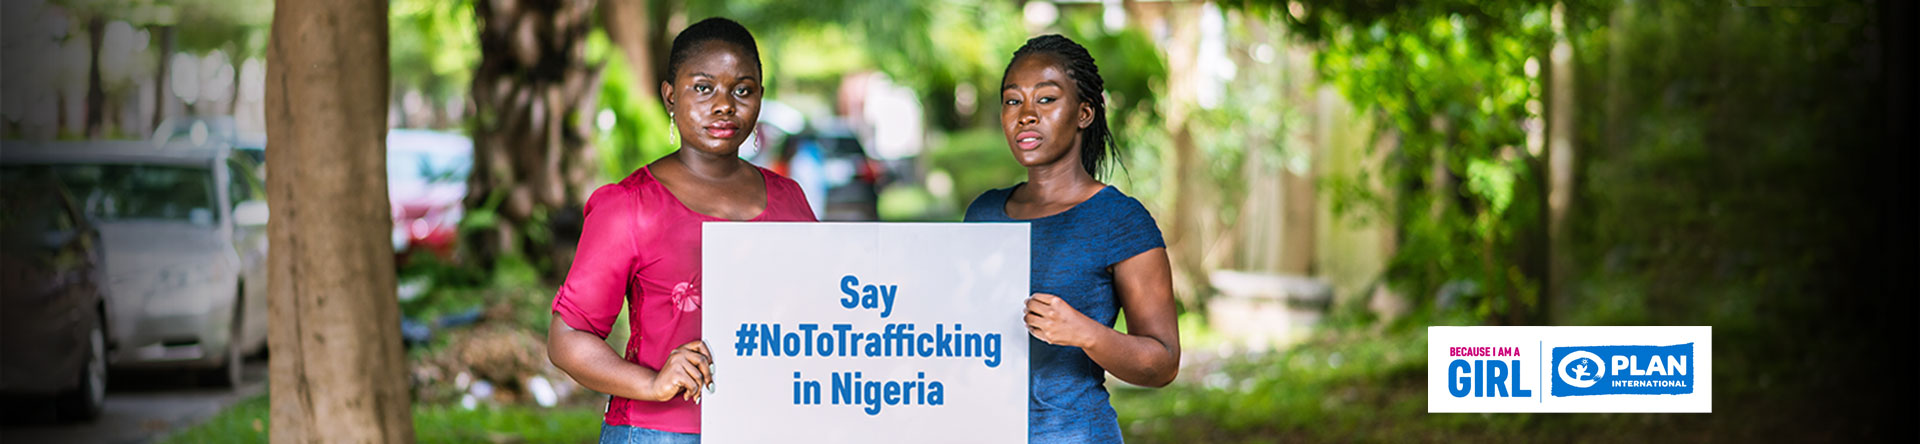 Say no to trafficking in Nigeria